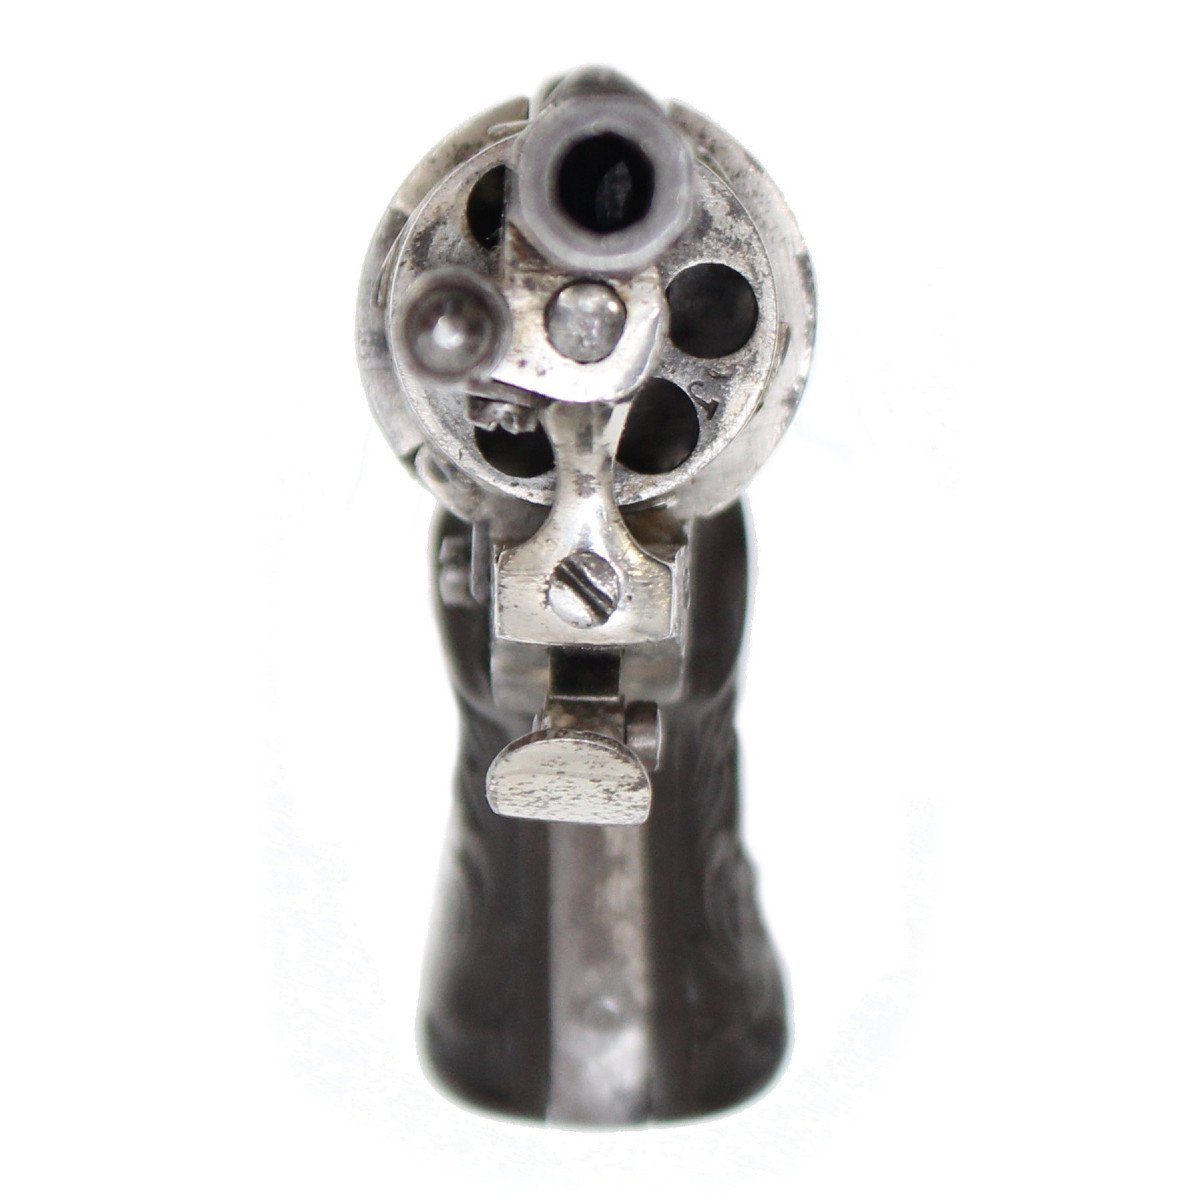 Lefaucheux Type Pinfire Revolver, Caliber 5 Mm, France Or Belgium, Mid-19th Century-photo-3